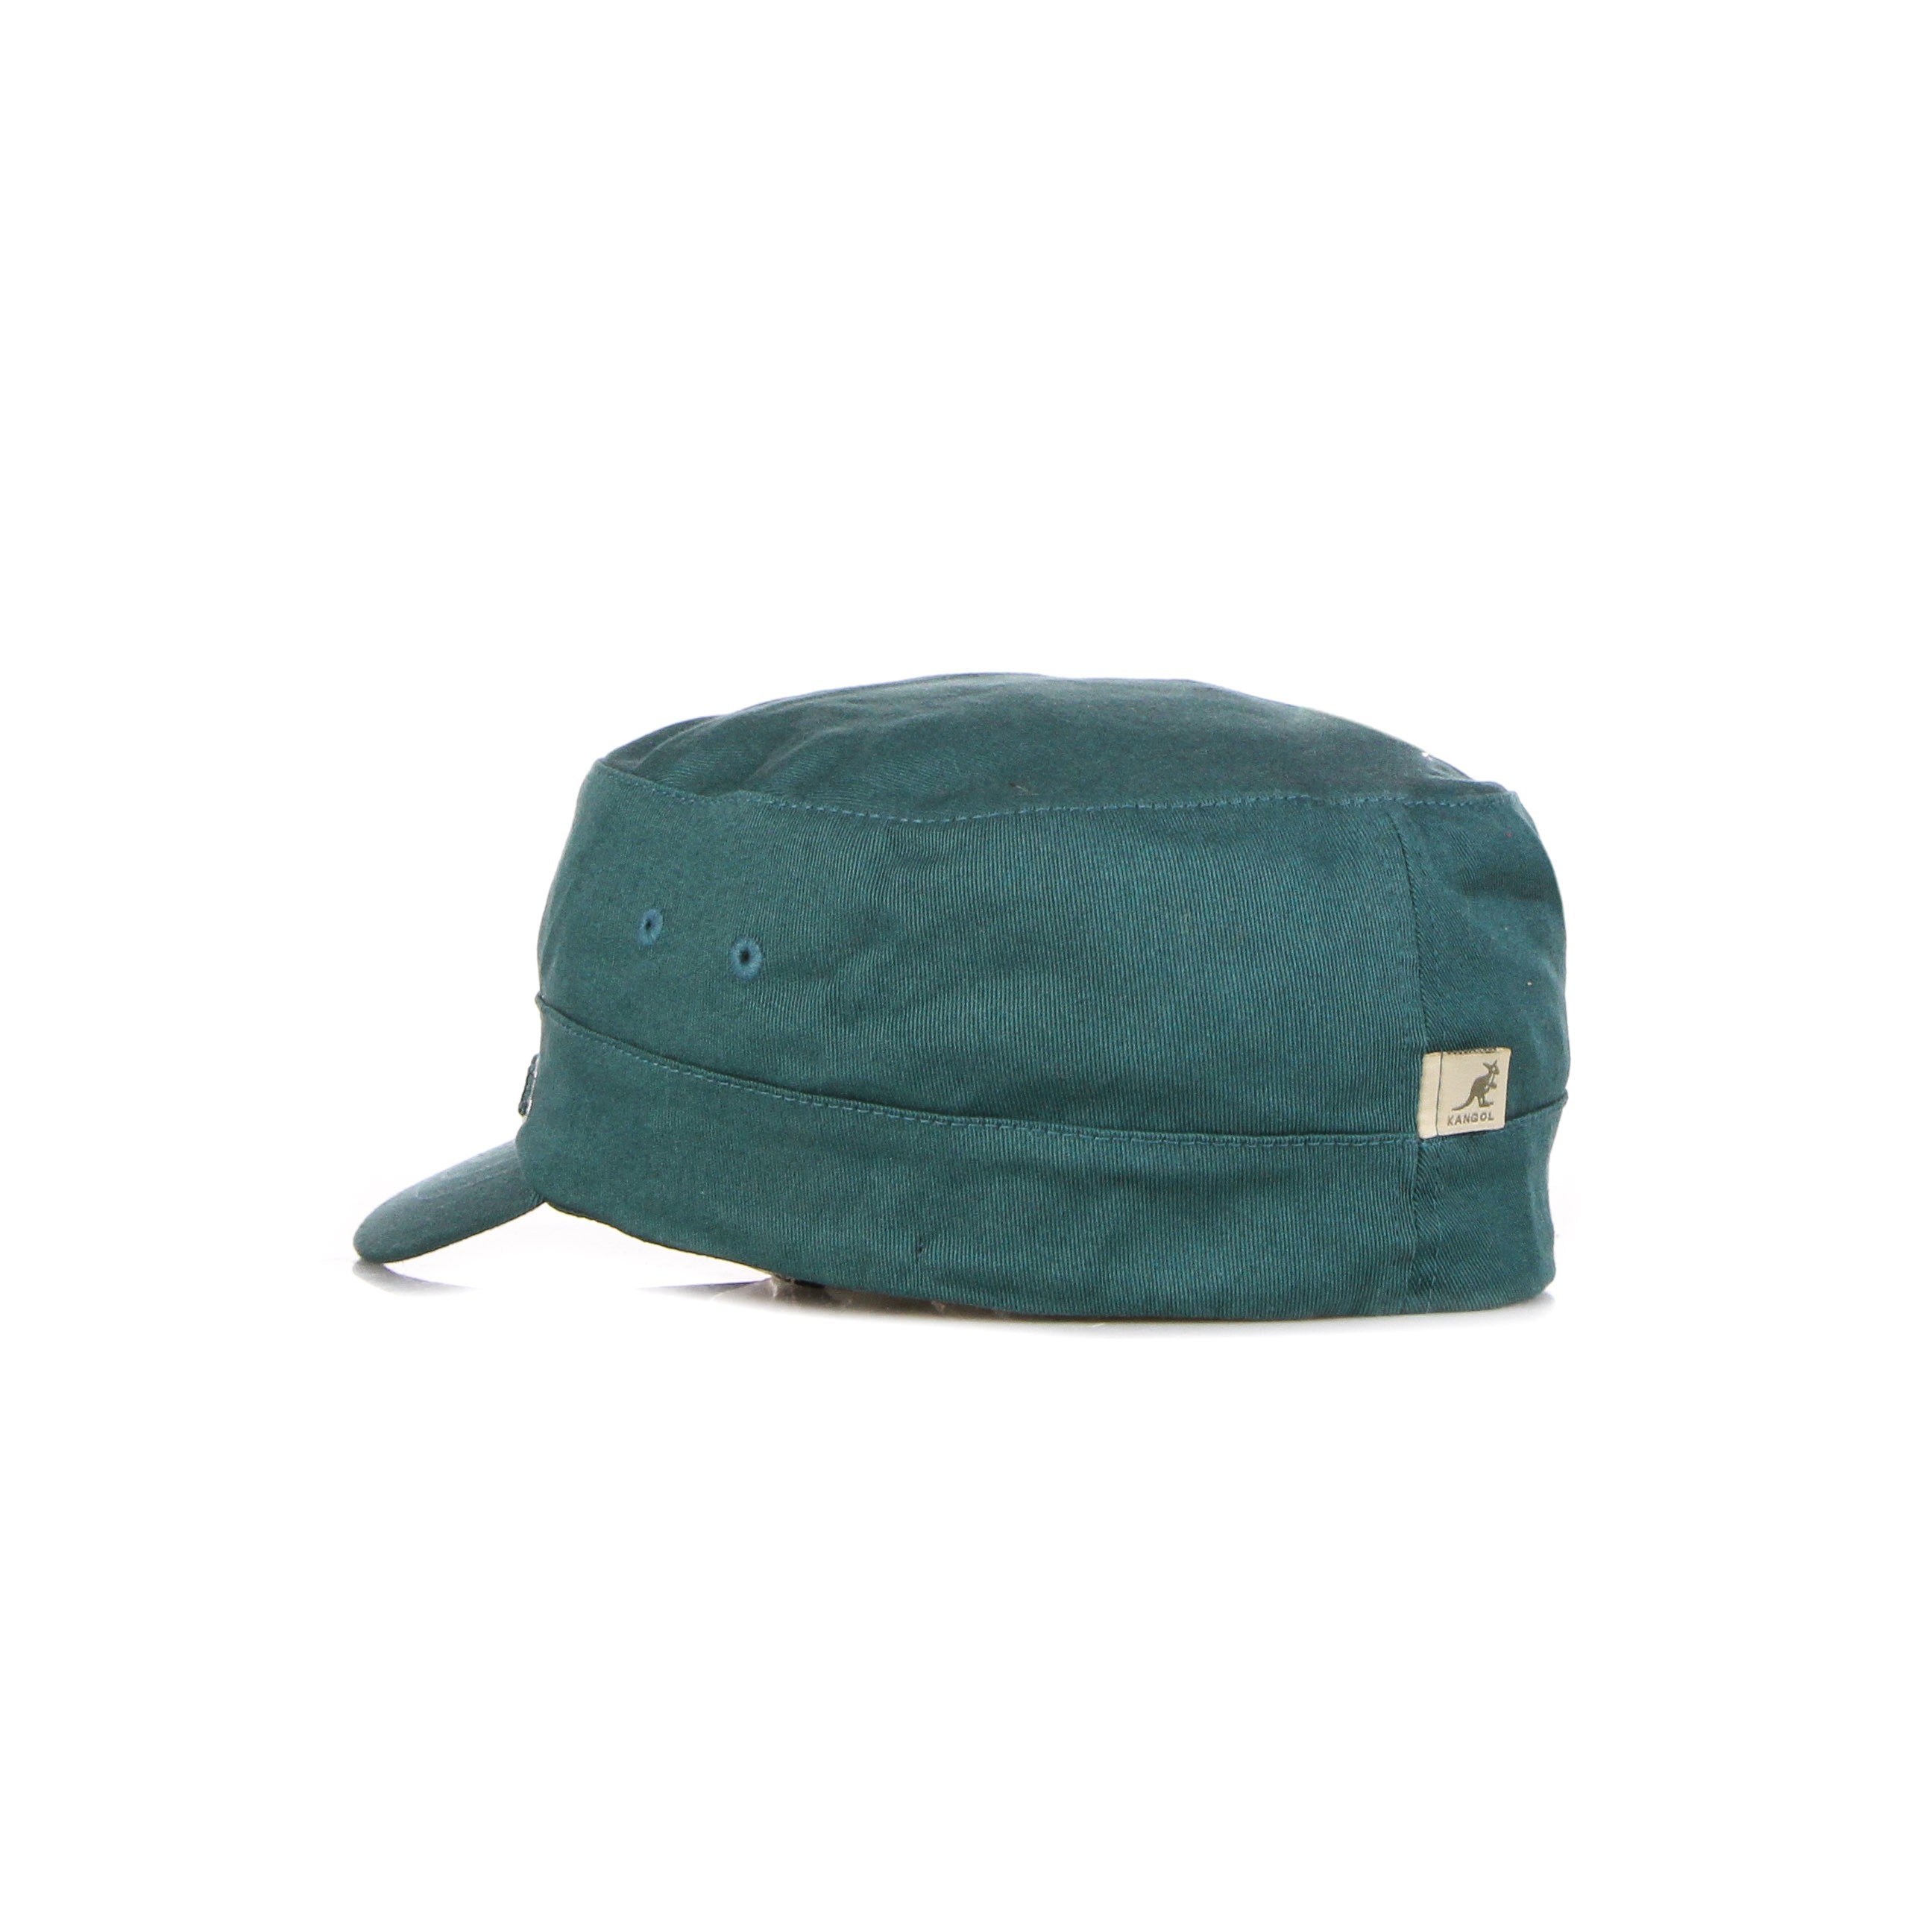 Flat Visor Cap for Men Cotton Twill Army Cap Green